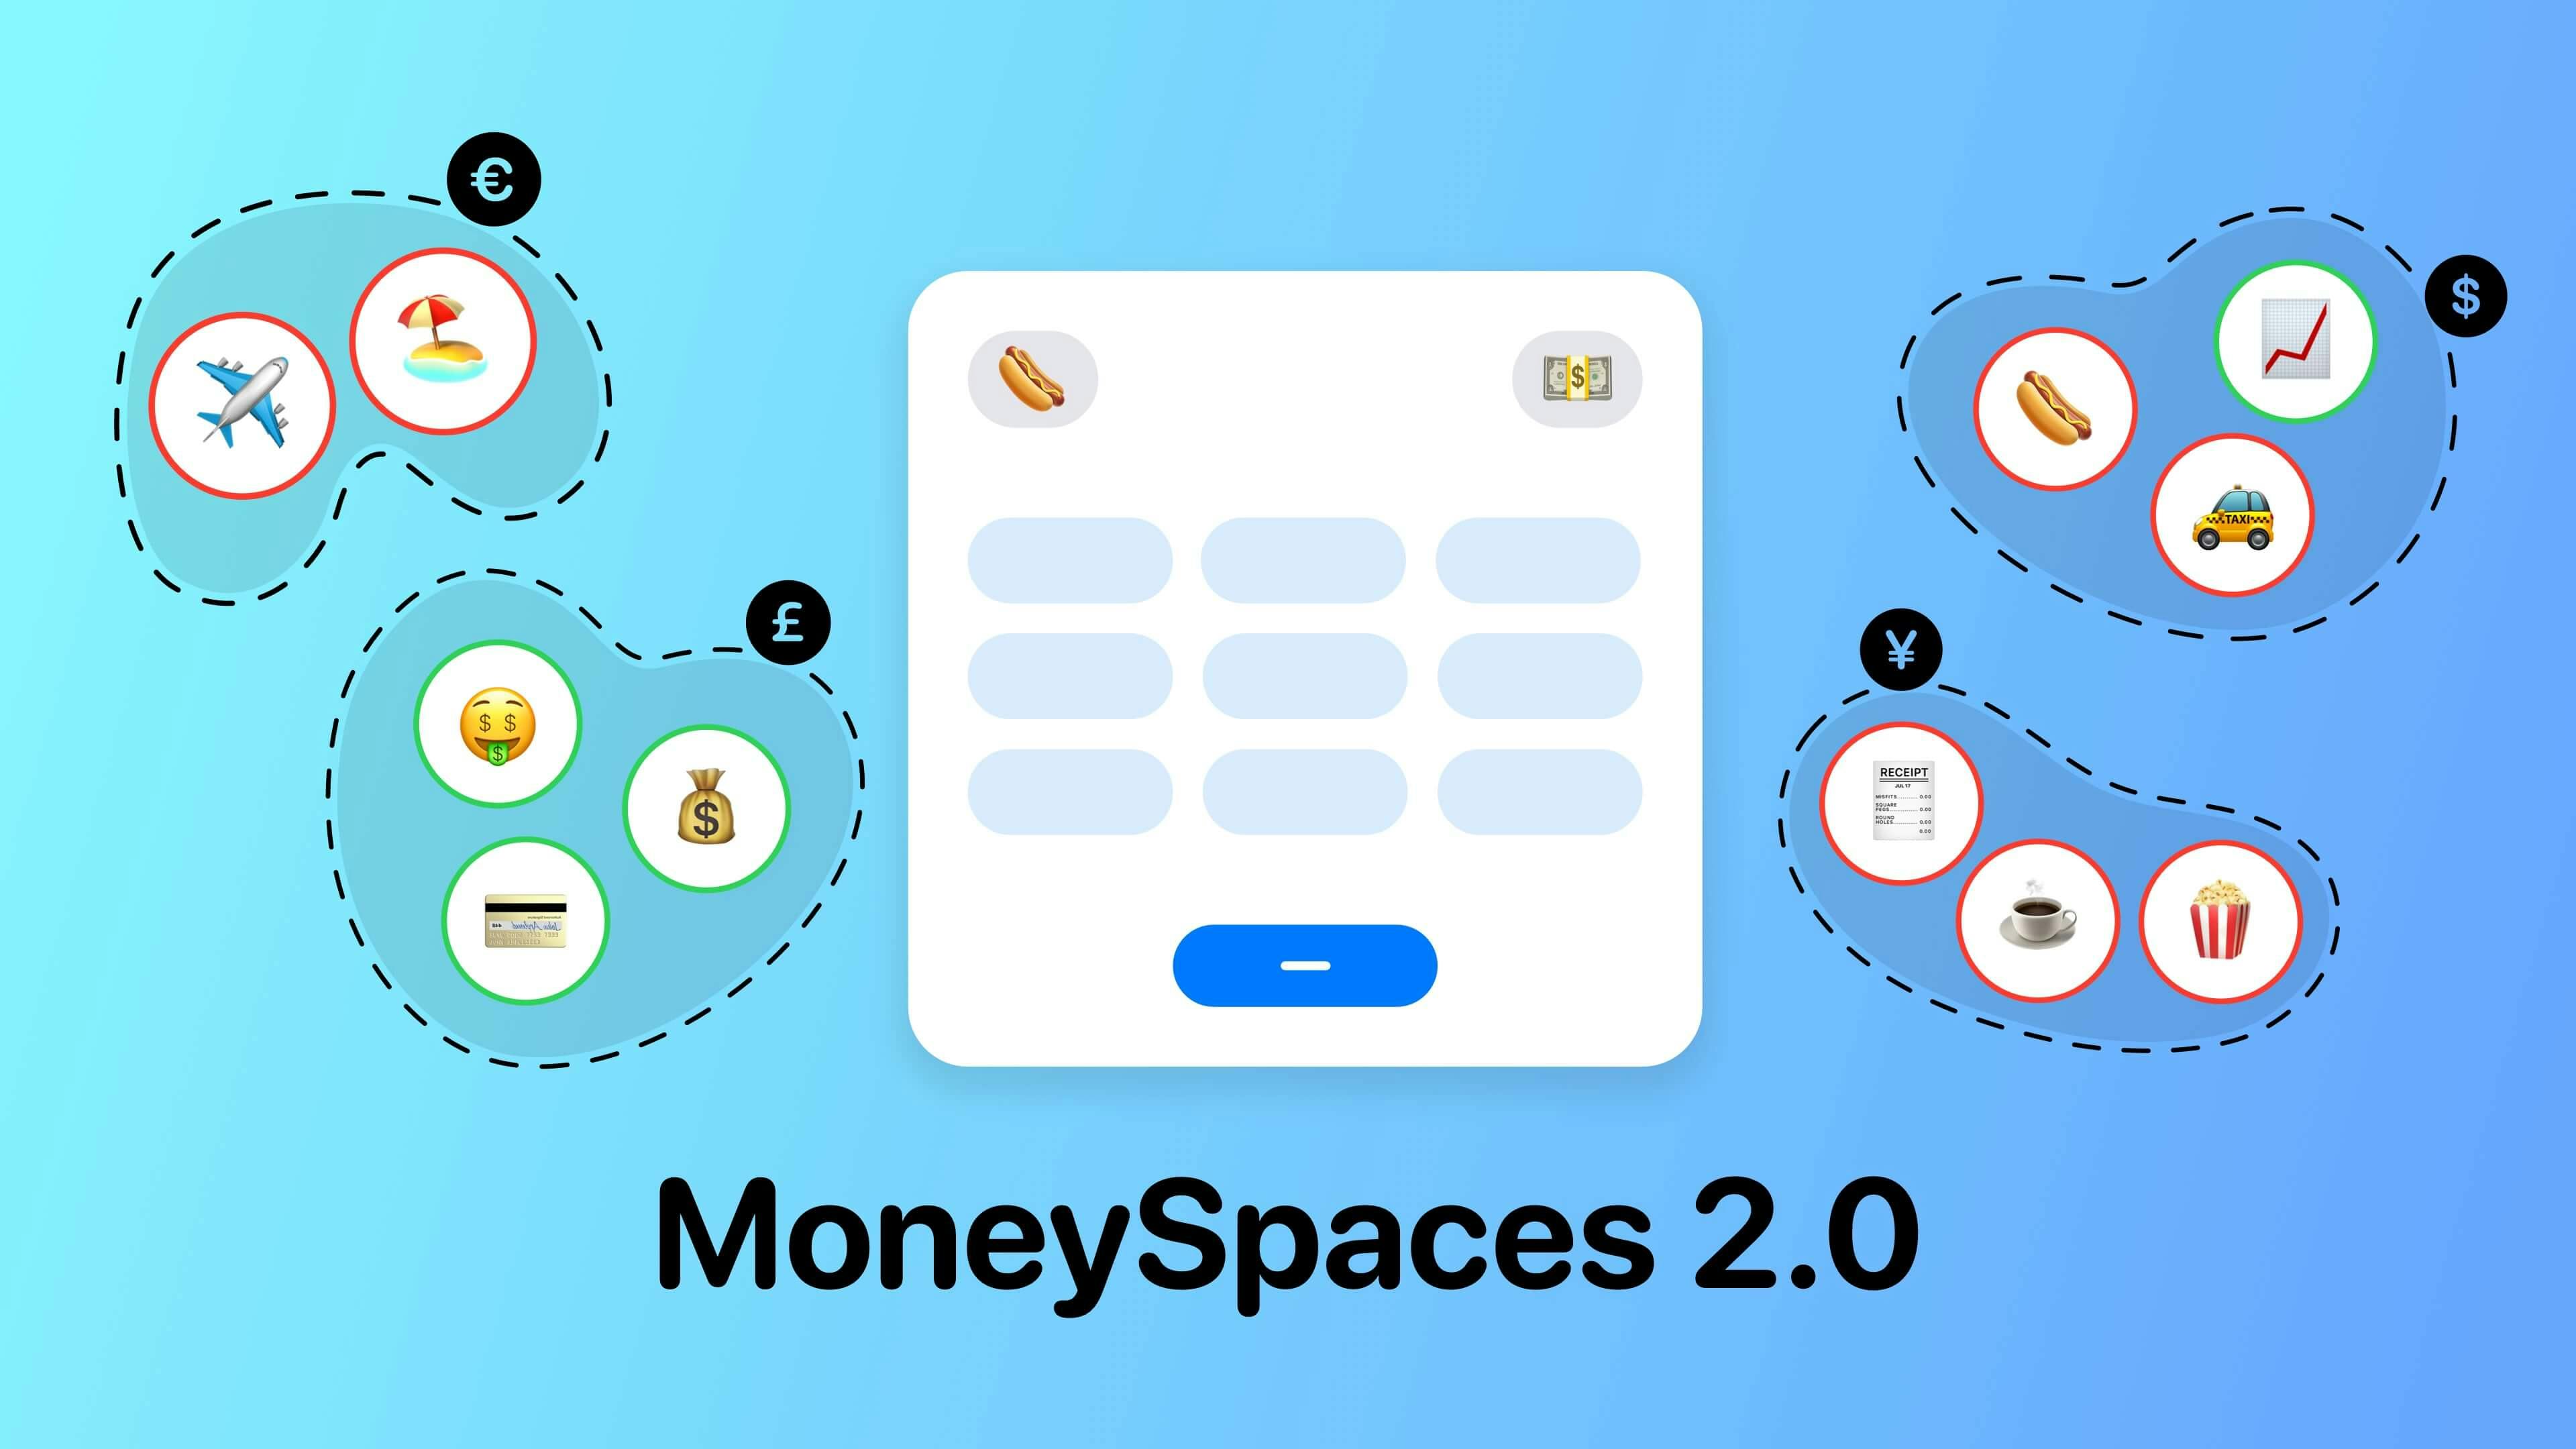 What's New In MoneySpaces 2.0?